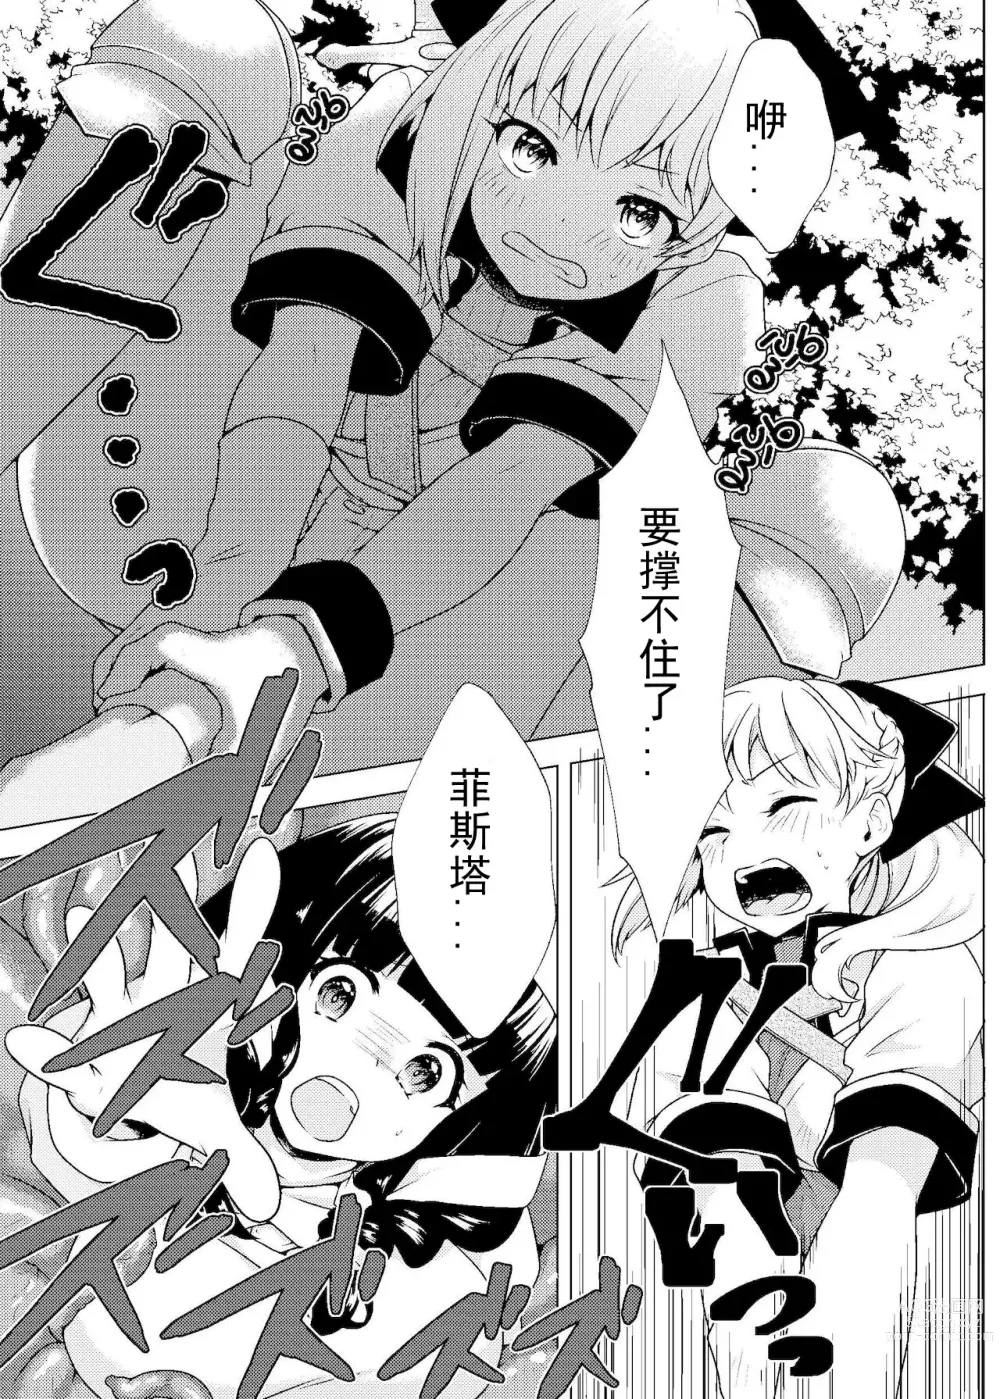 Page 6 of manga Nakayoshi Boukensha no Marunomi Haiboku End